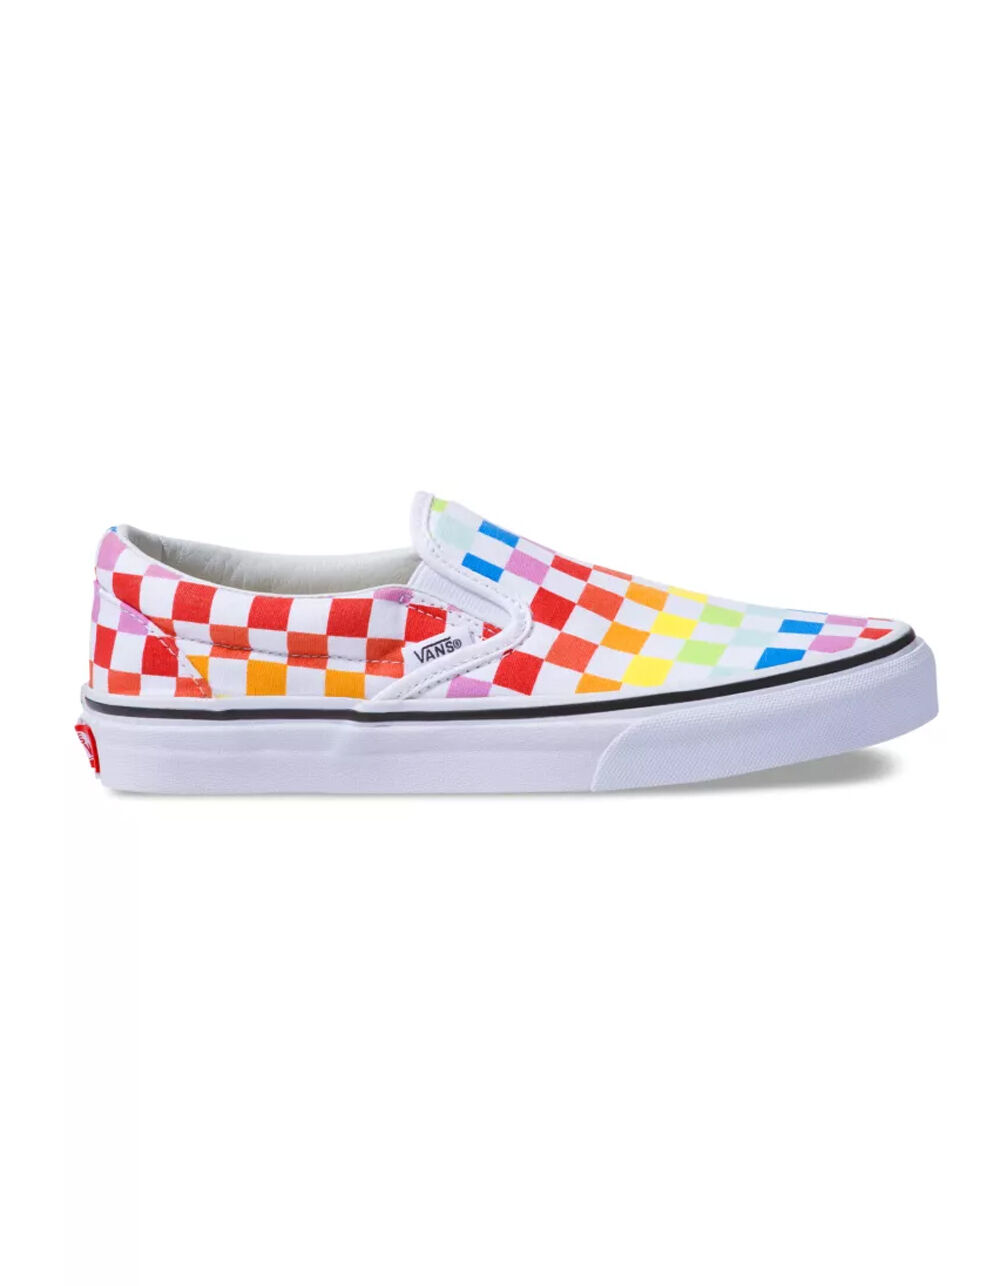 VANS Rainbow Classic Slip-On Kids Shoes - MULTI | Tillys